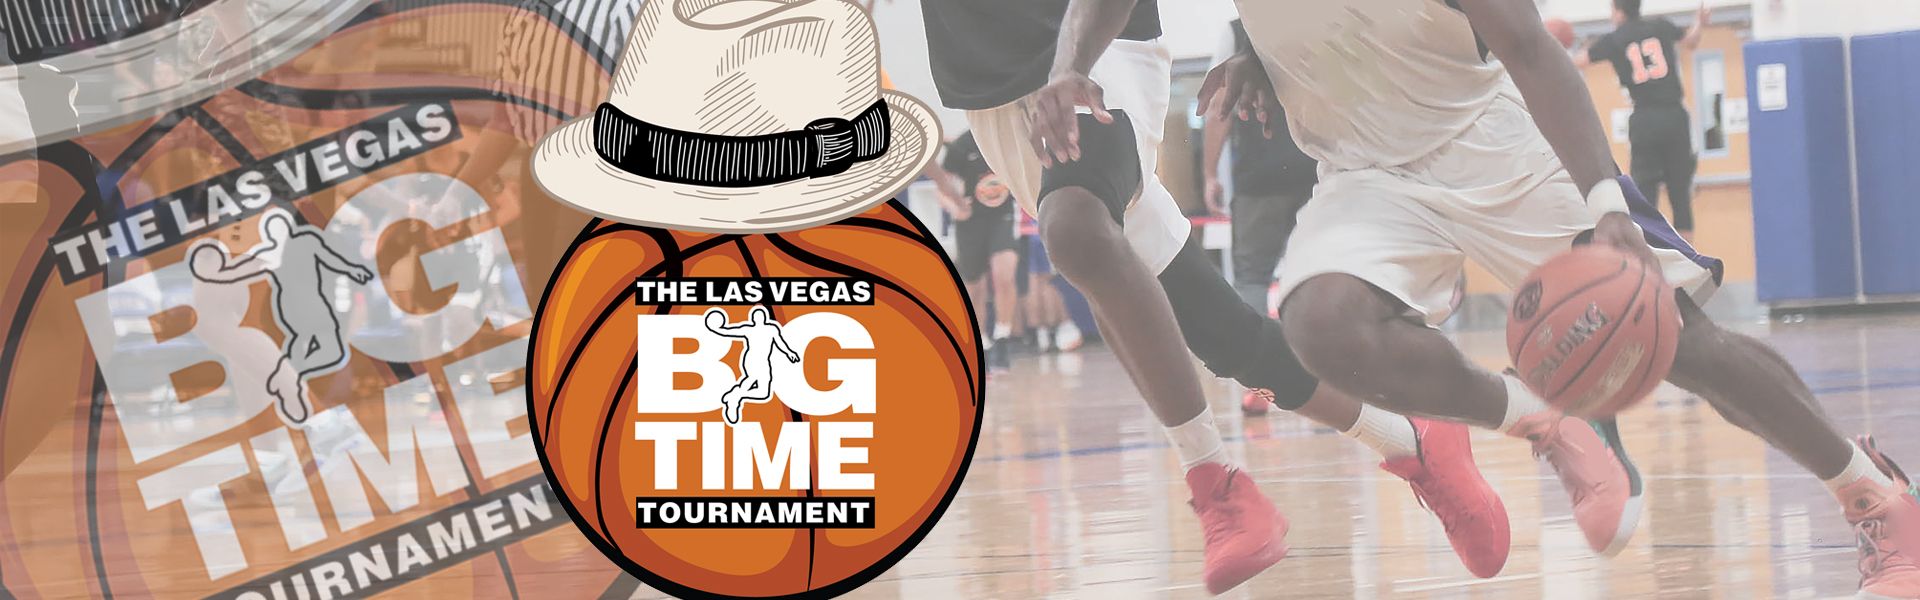 The Las Vegas Big Time Tournament Announces Streaming Platform